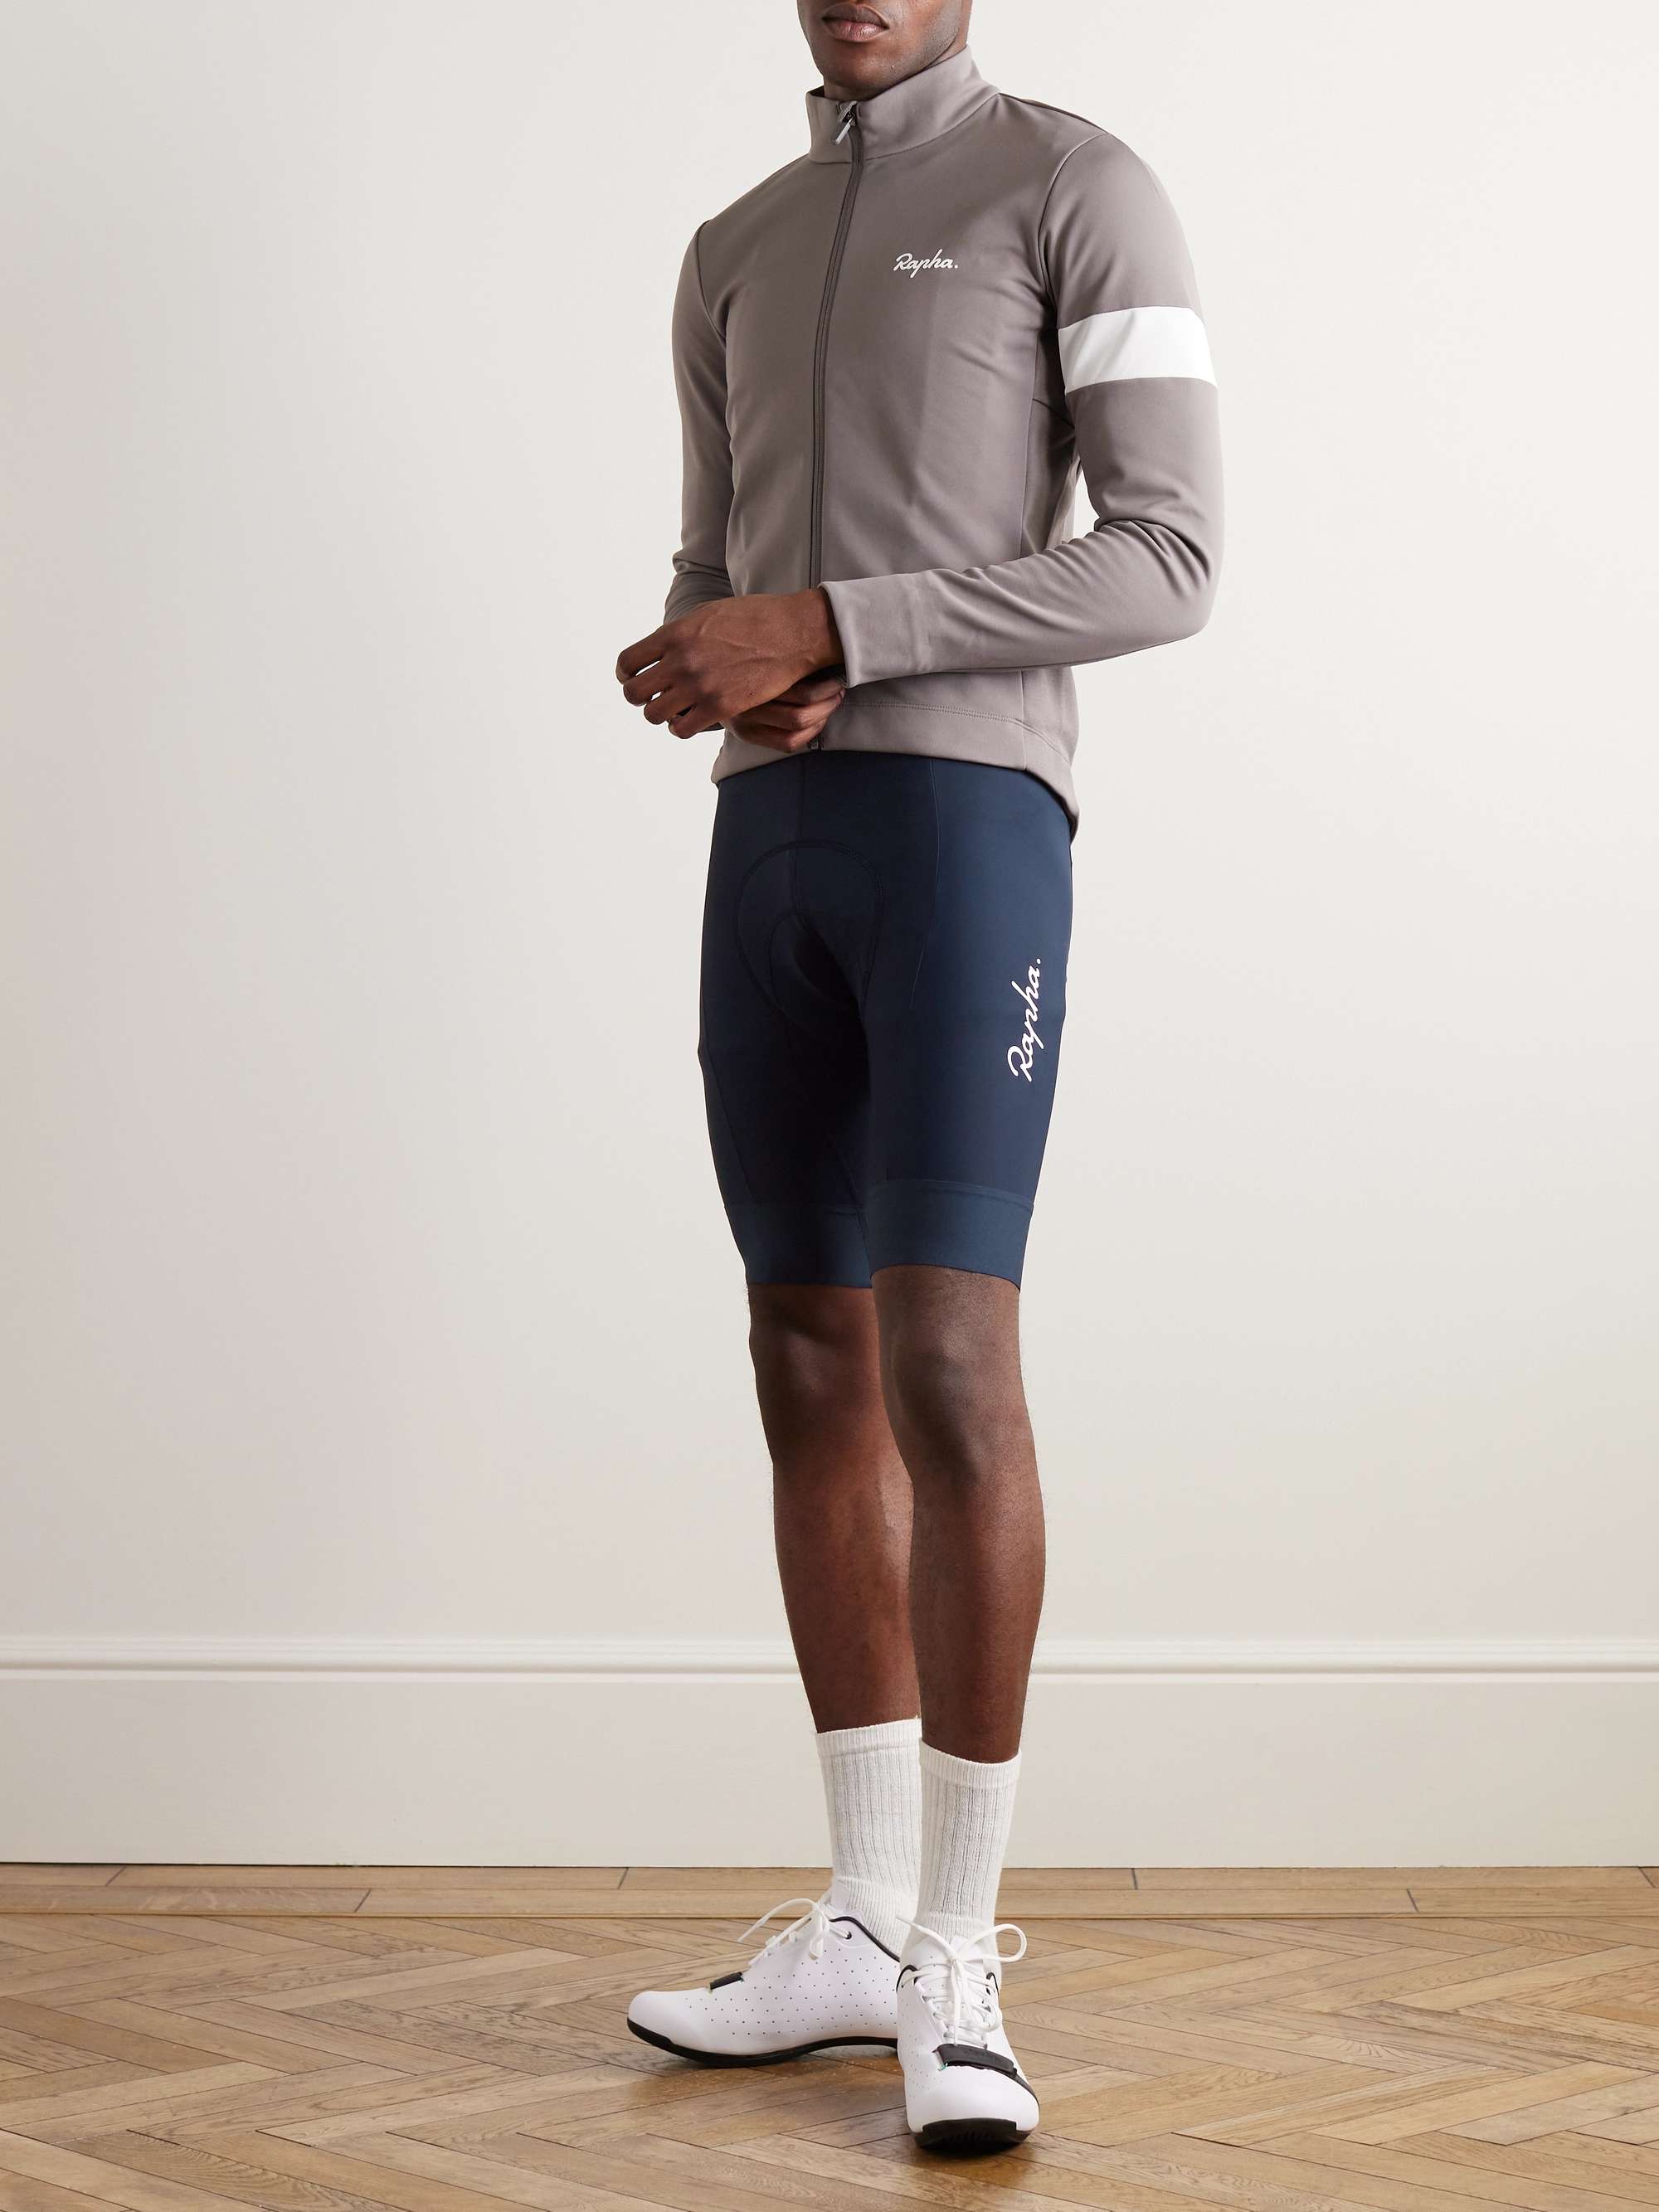 RAPHA Core Cycling Bib Shorts for Men | MR PORTER